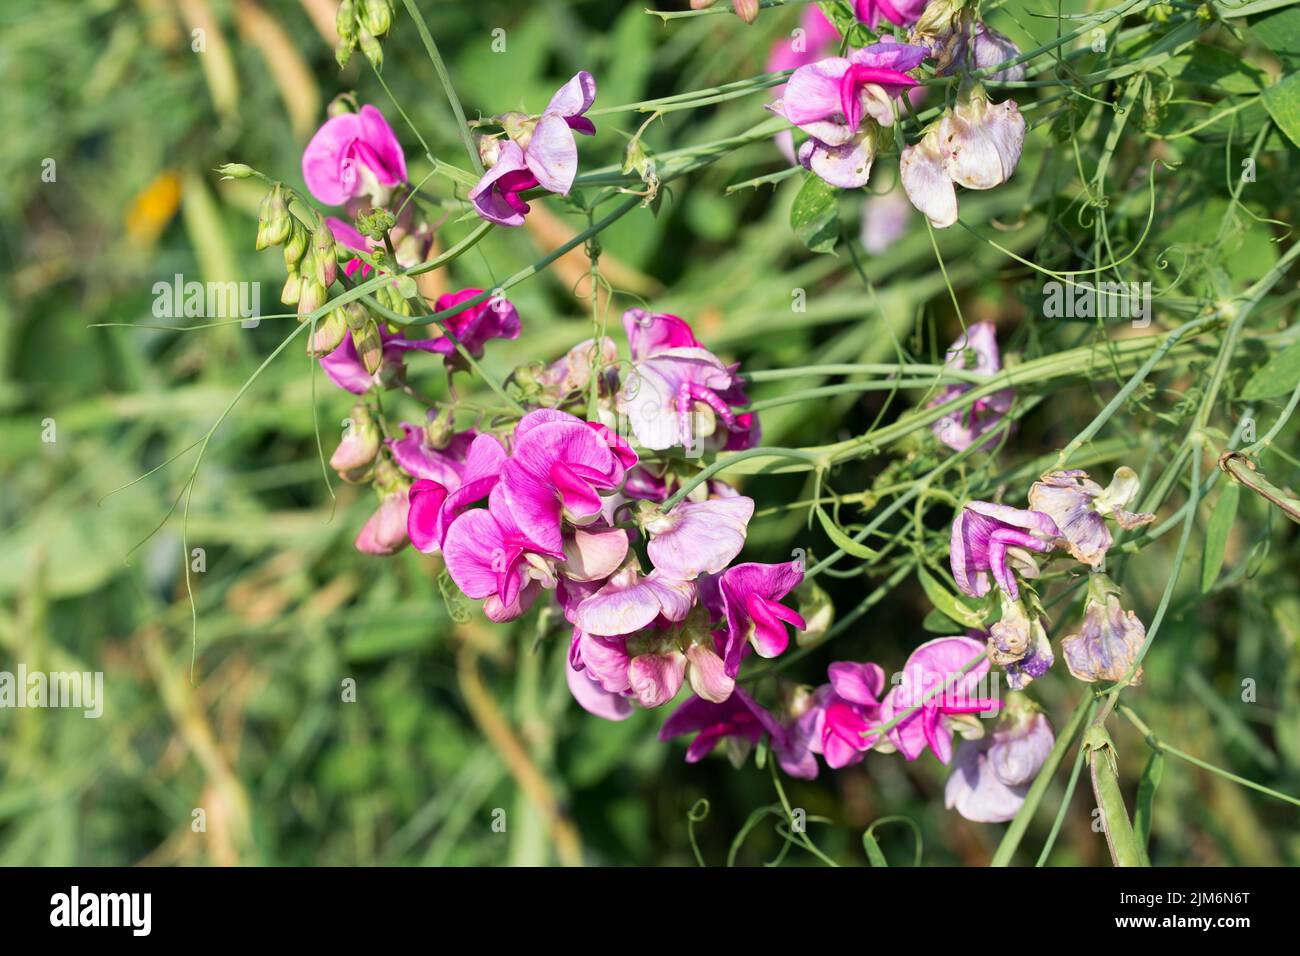 guisante dulce, lathyrus odoratus flores de verano rosa primer plano enfoque selectivo Foto de stock